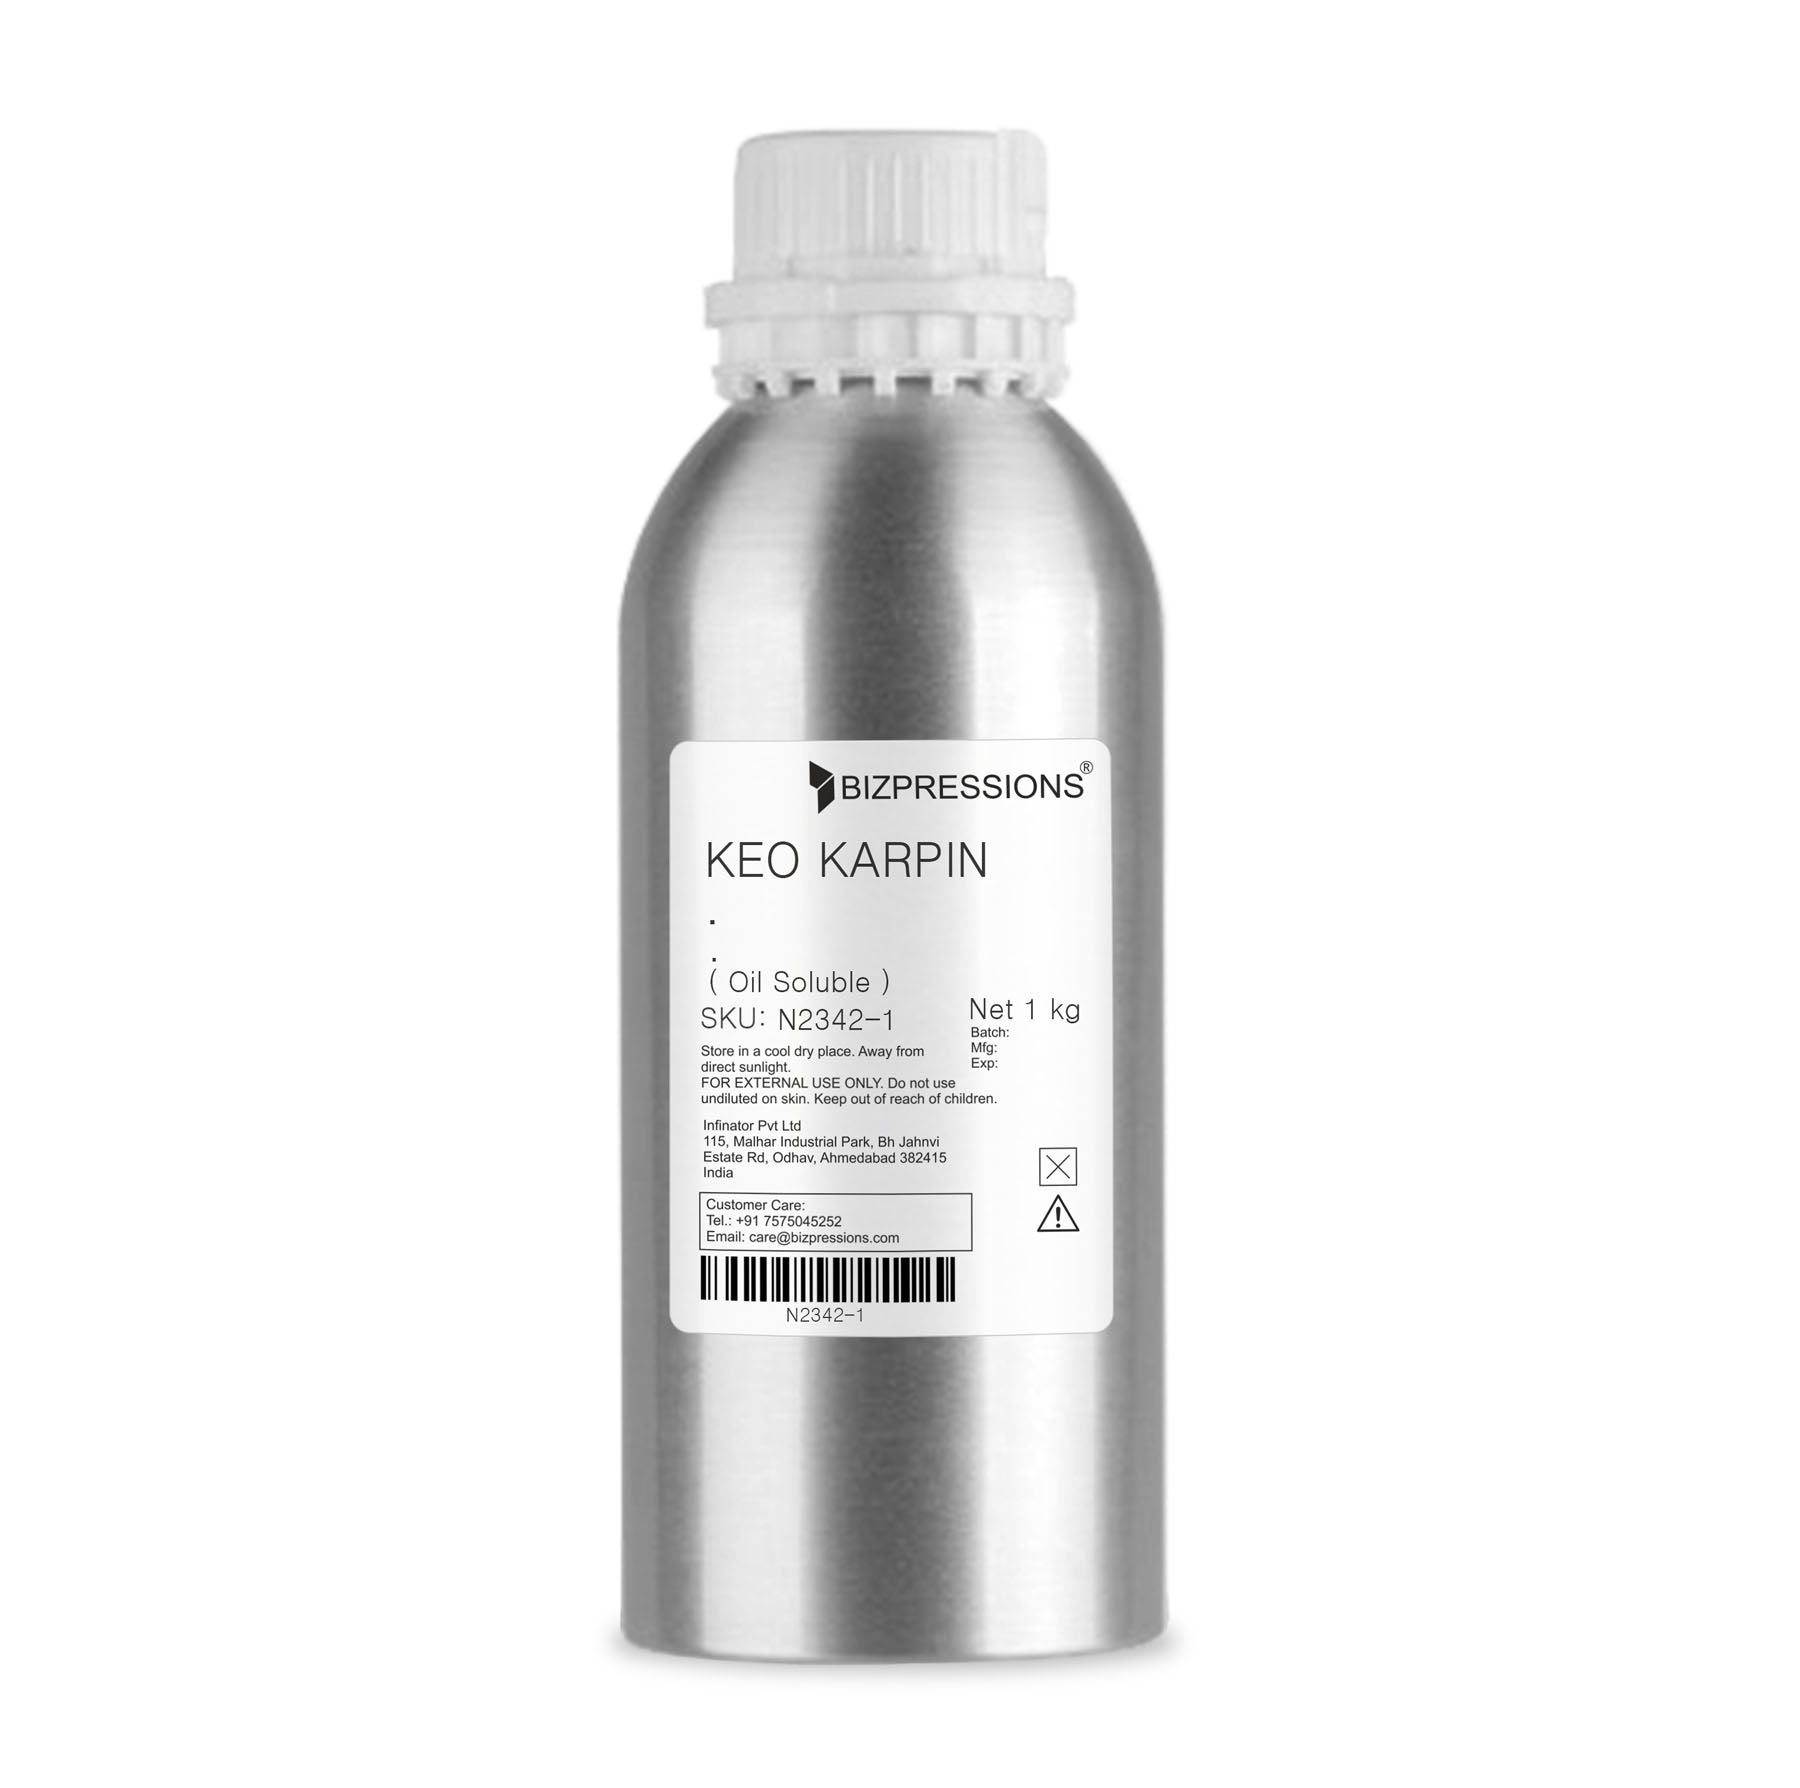 KEO KARPIN - Fragrance ( Oil Soluble ) - 1 kg